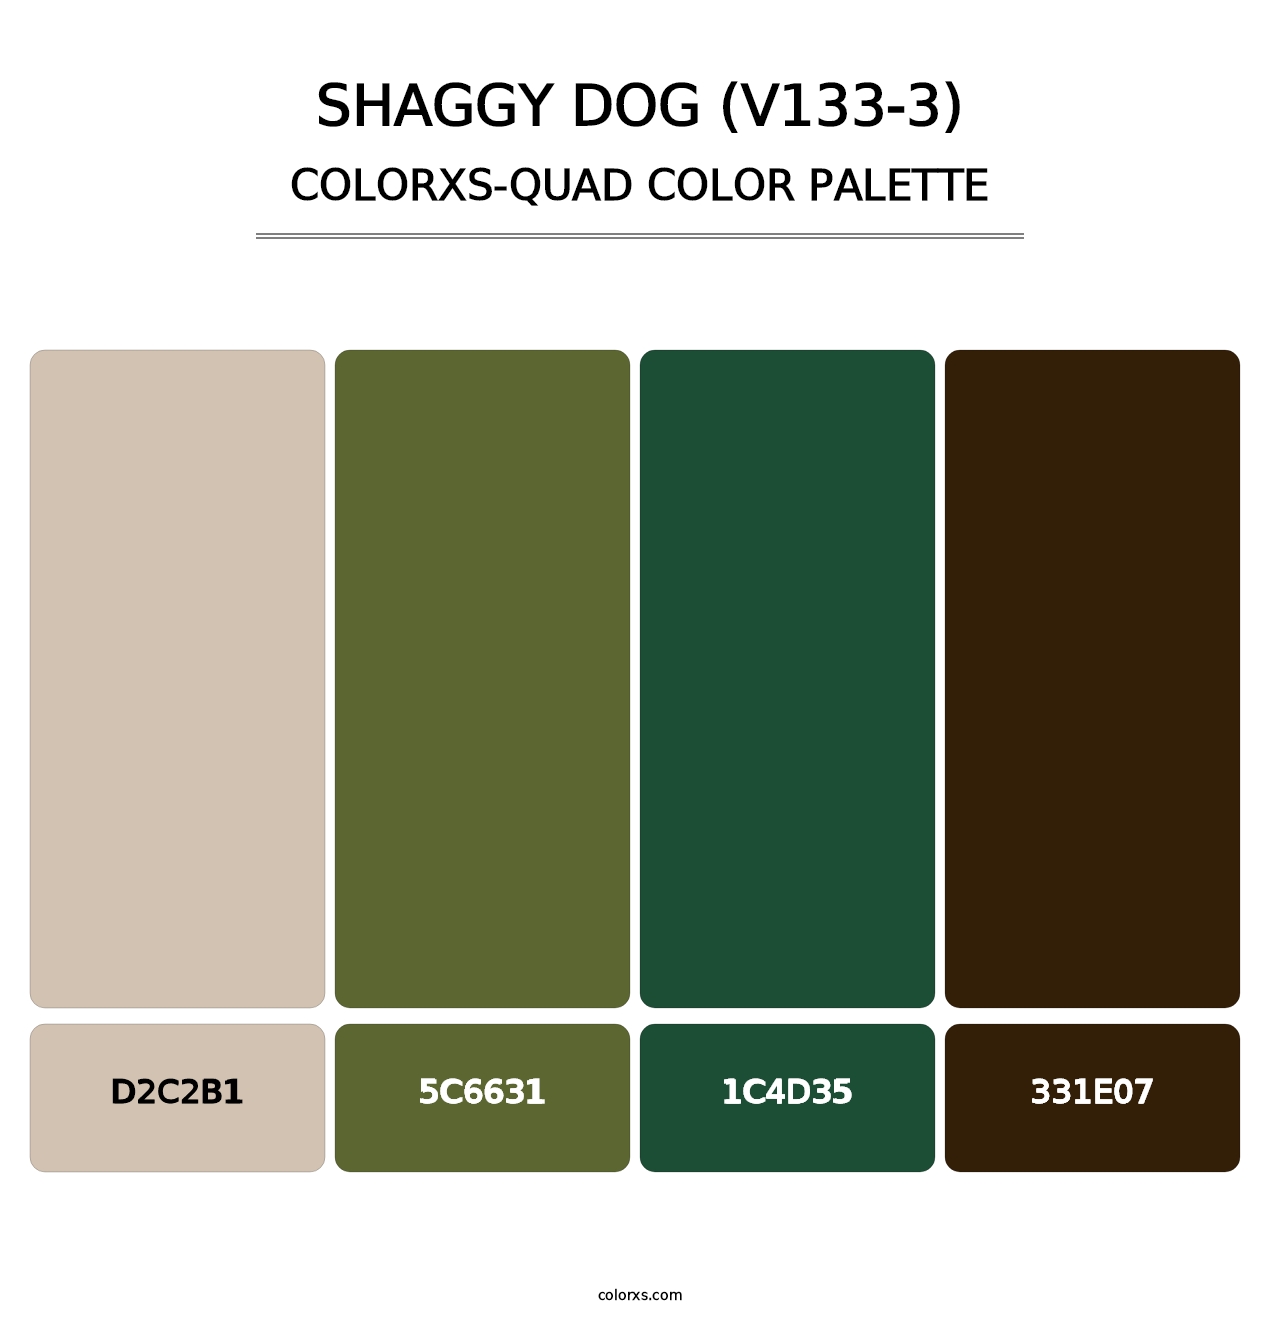 Shaggy Dog (V133-3) - Colorxs Quad Palette